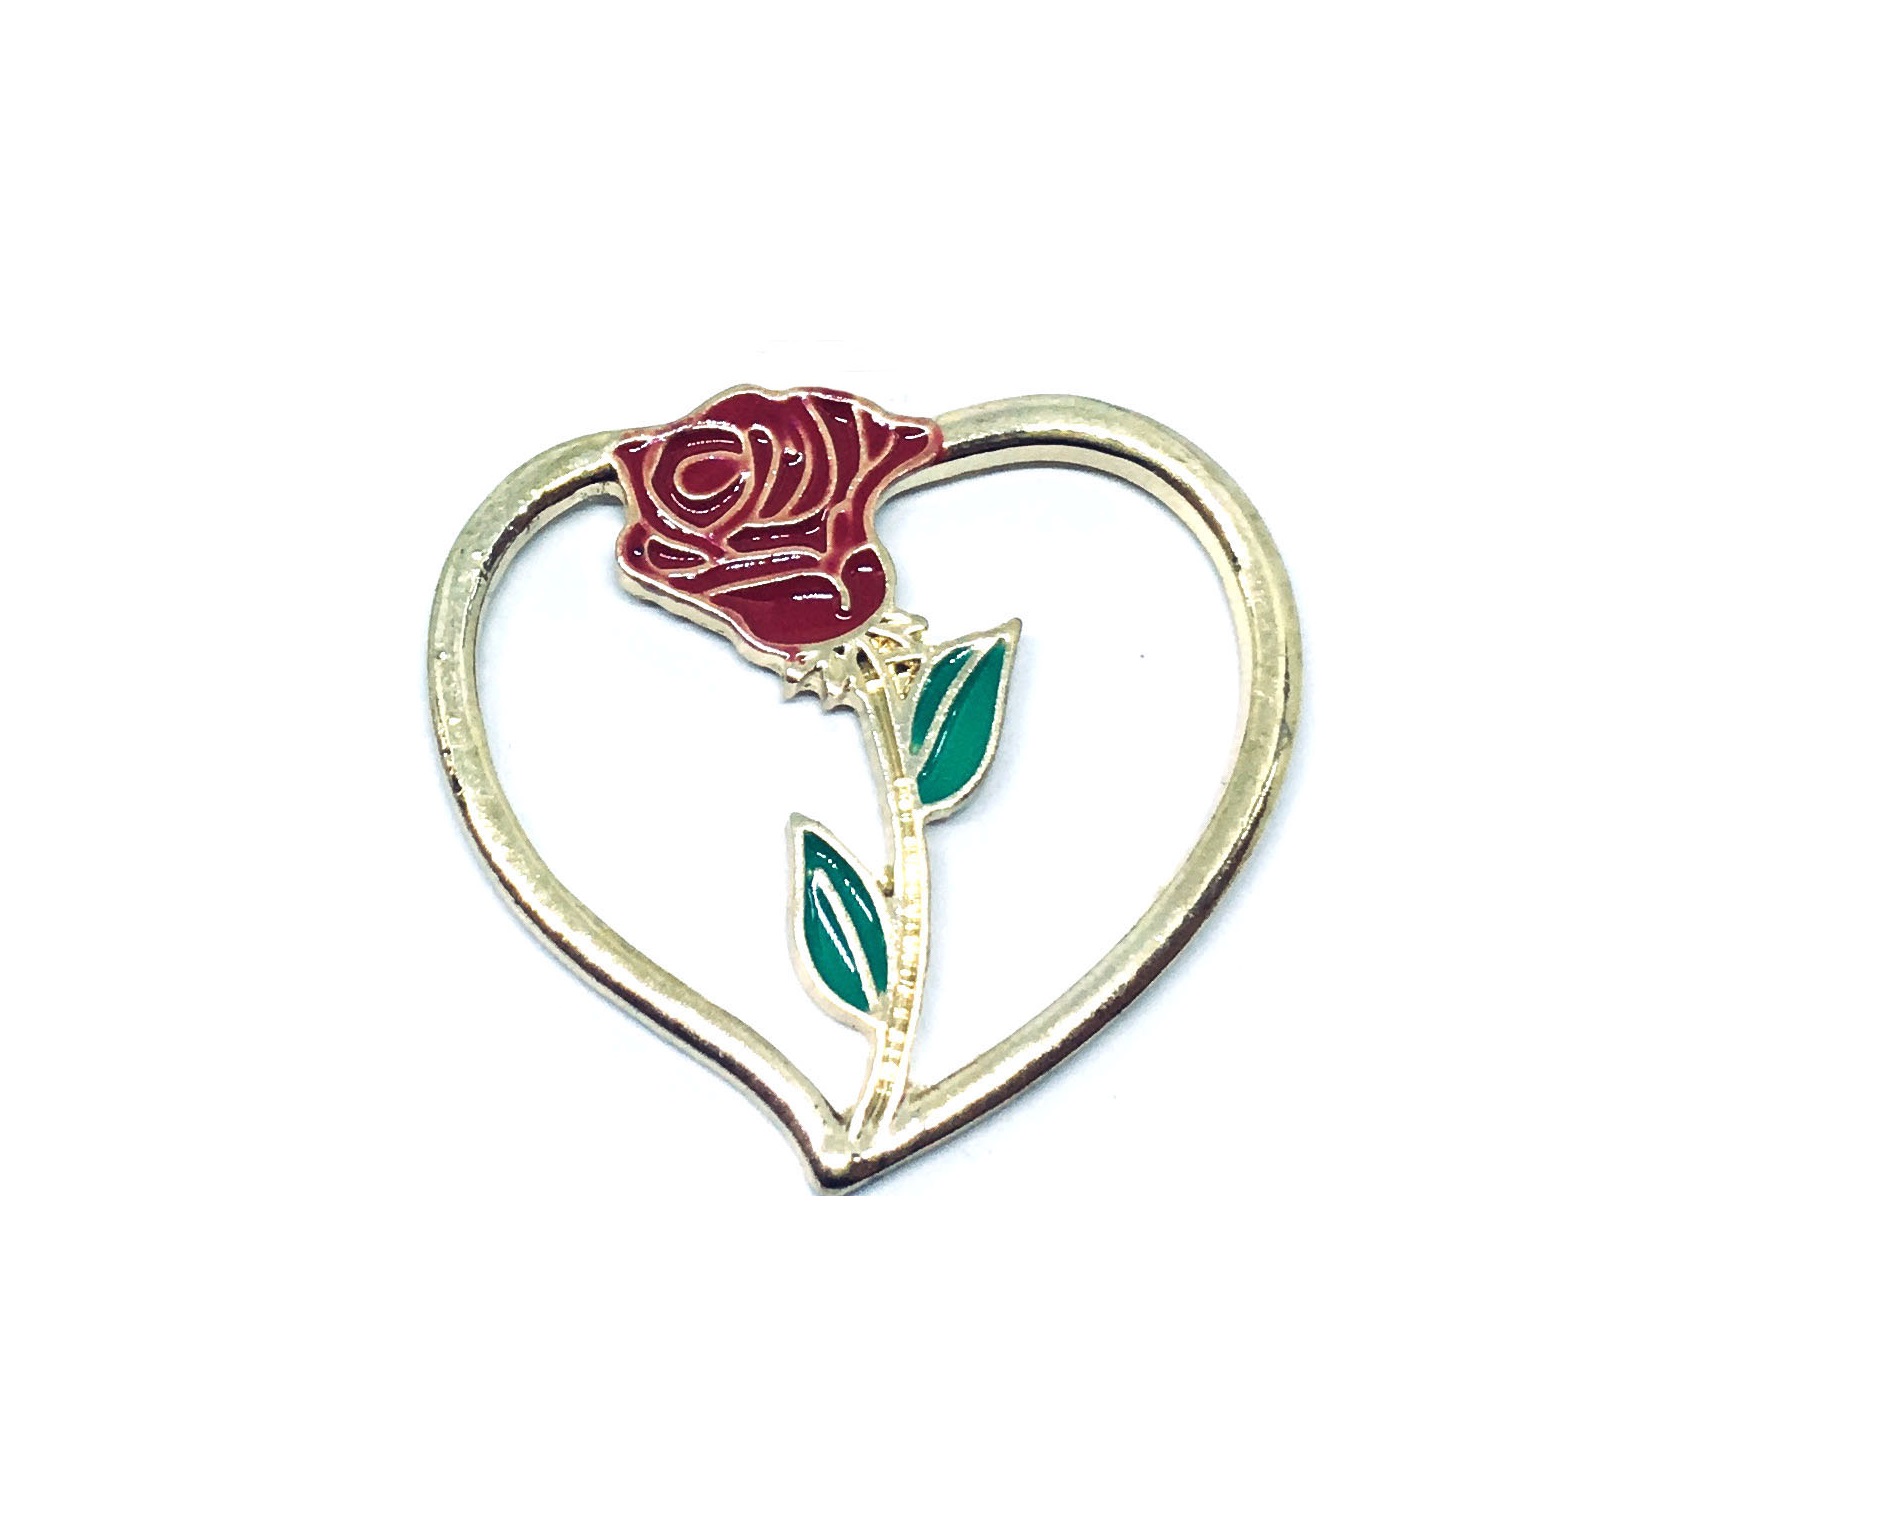 Heart Rose Pin